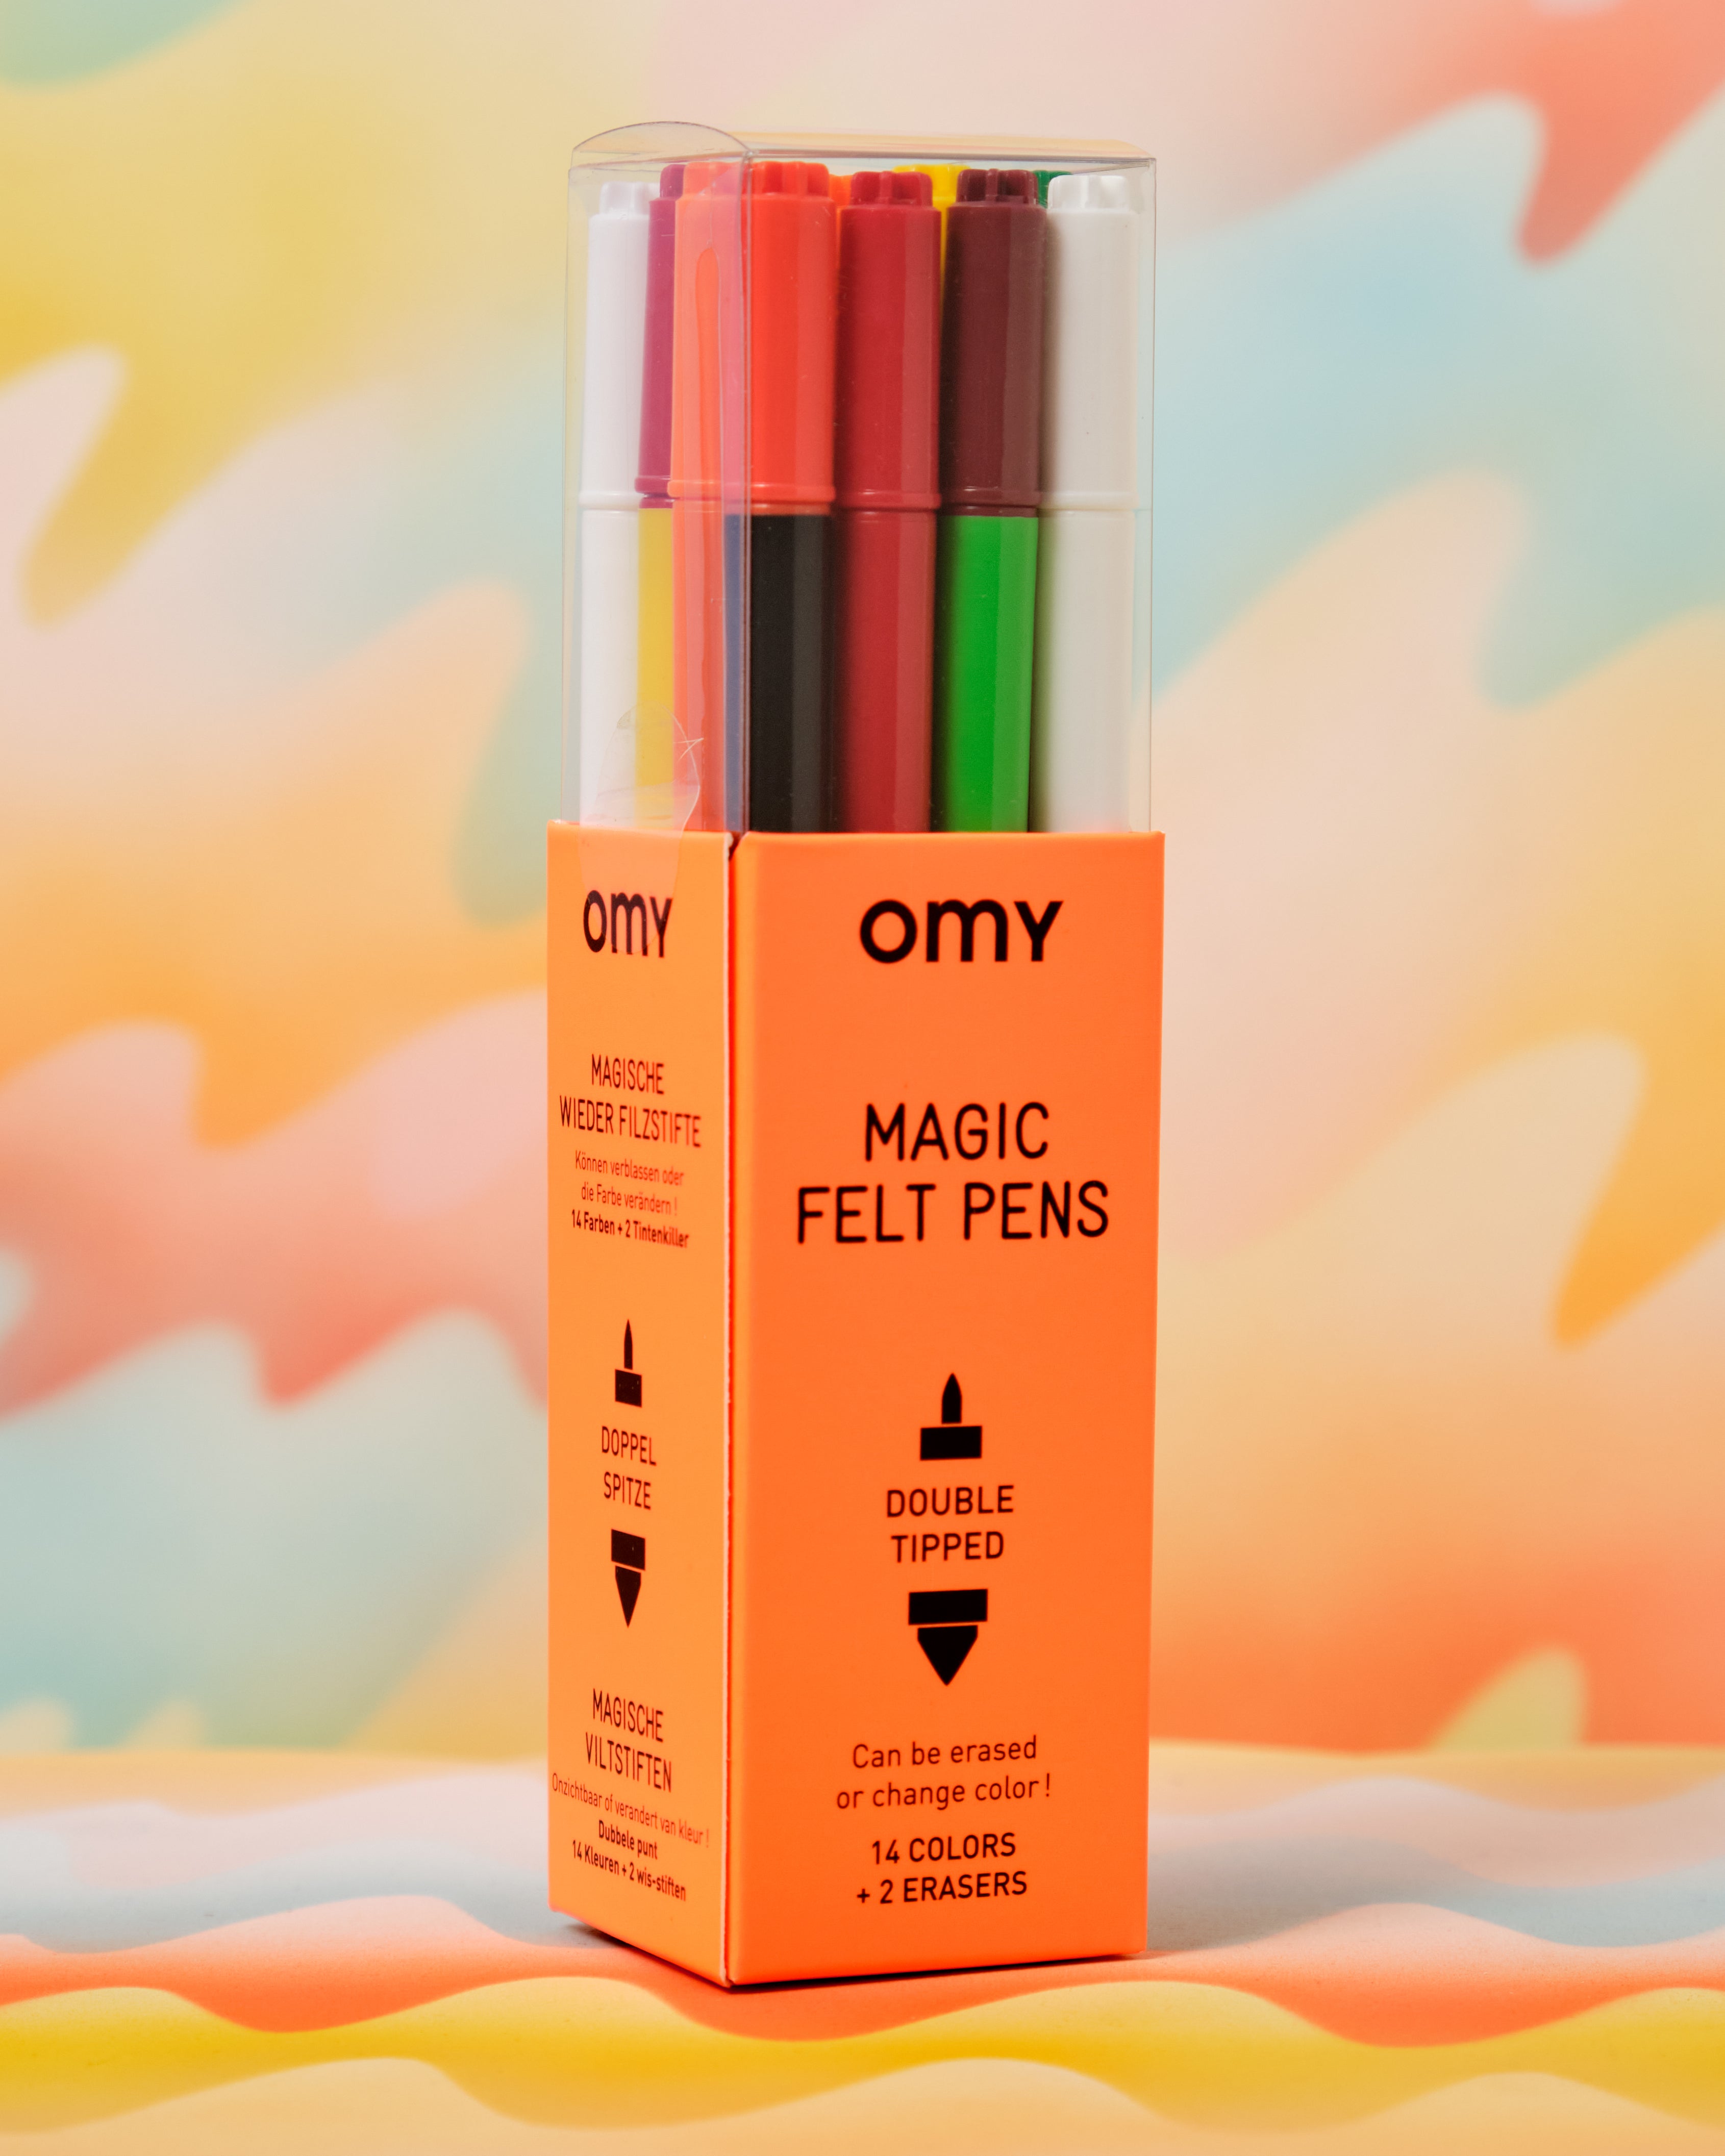 OMY 16 Magic Markers